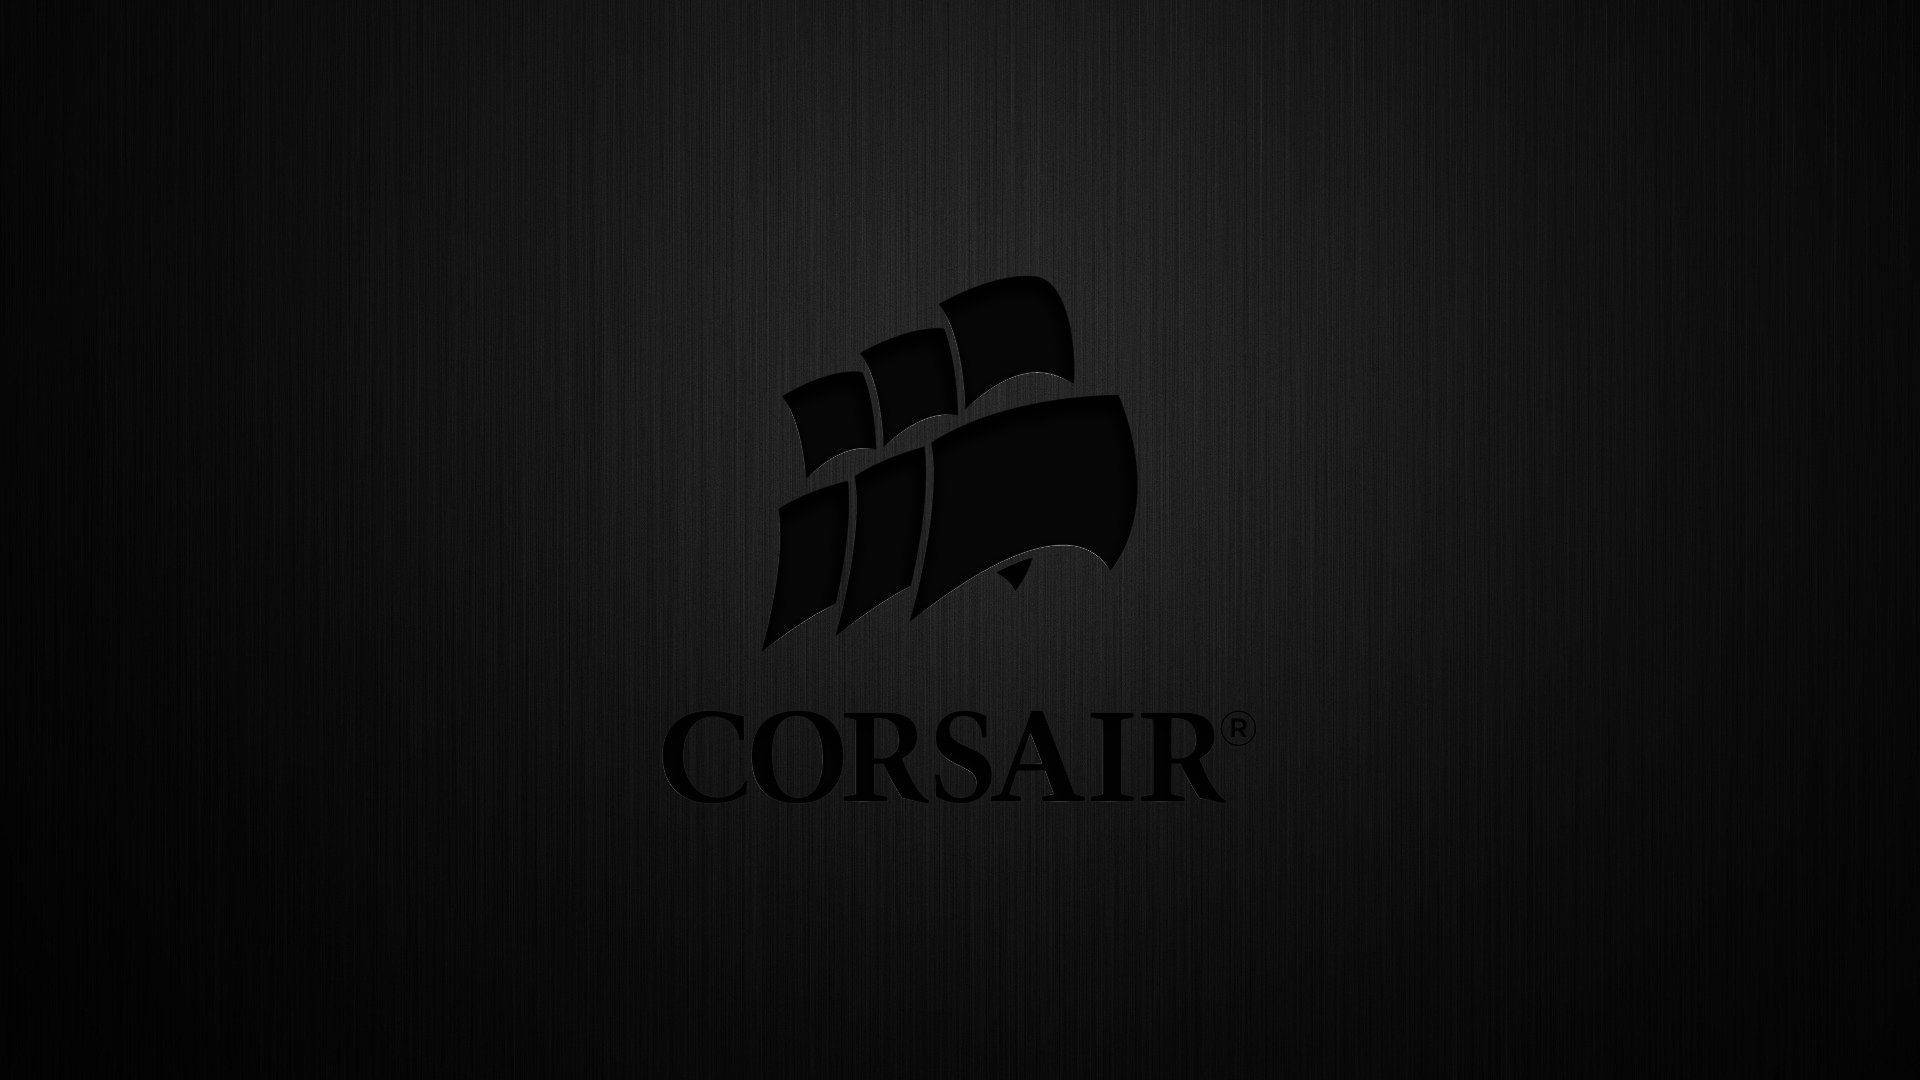 Black Metal Corsair Logo Background